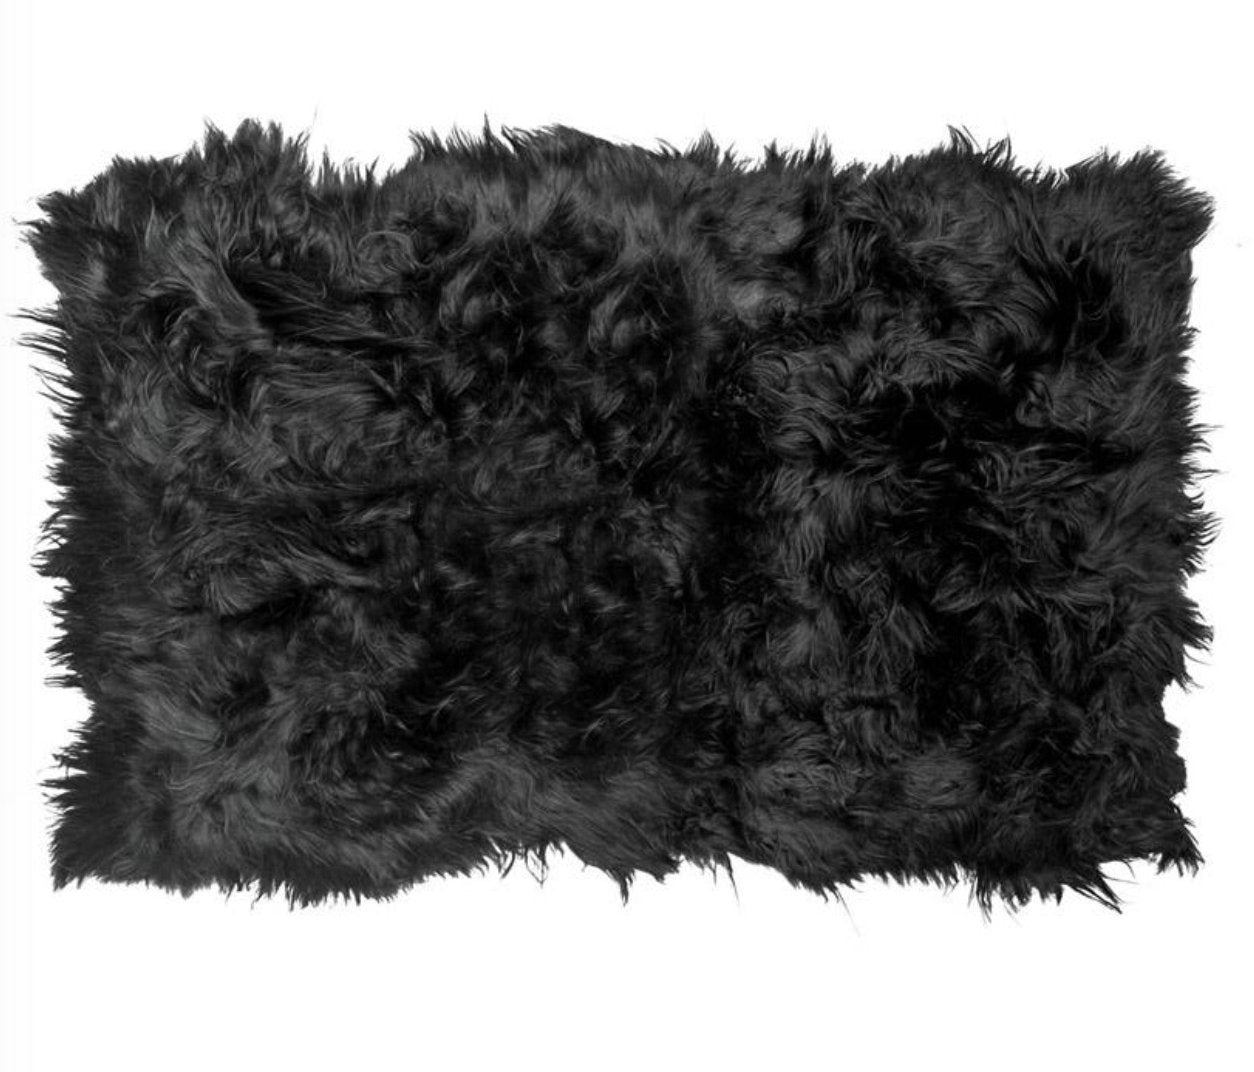 Icelandic Sheepskin Long Fur Rug 100% Natural Black Sheep Skin Throw ALL SIZES available Double, Triple, Quad, Penta, Sexto, Octo - Wildash London